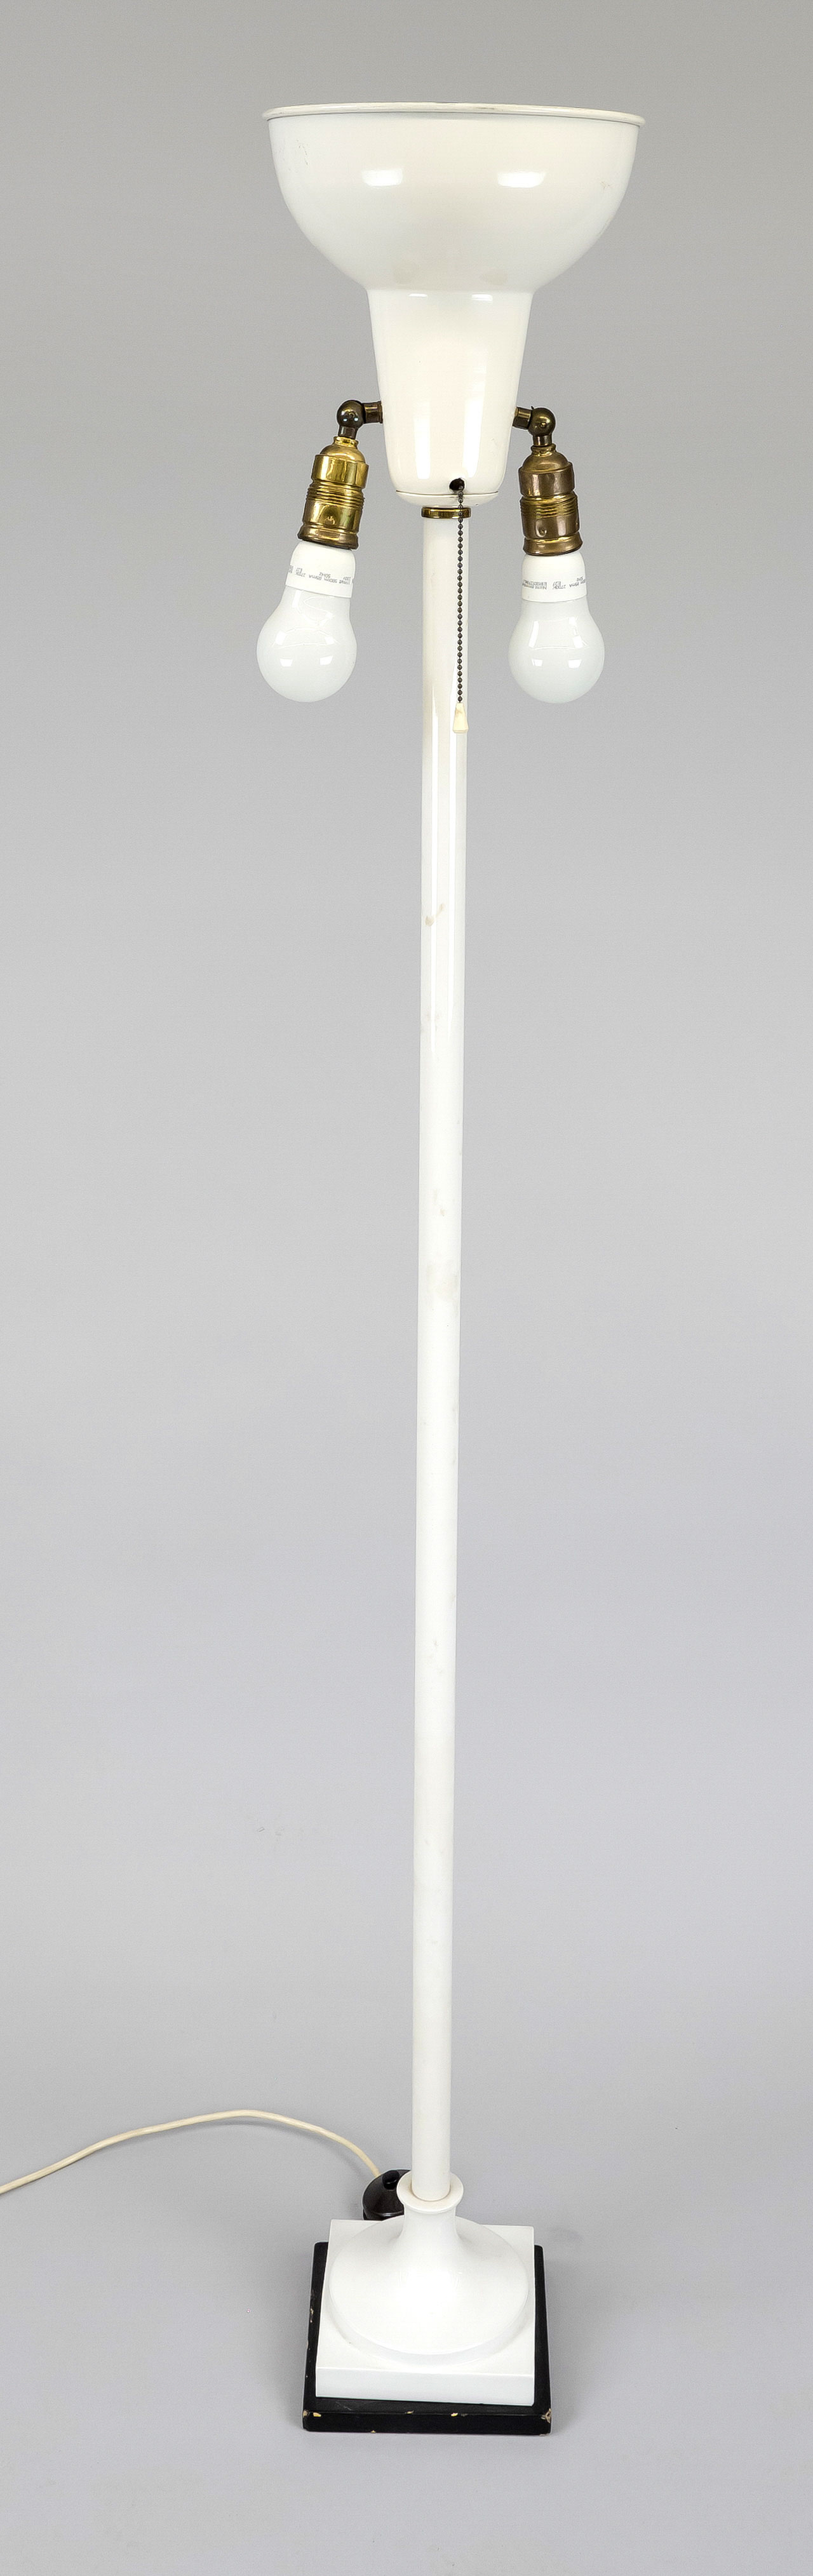 Floor lamp, KPM Berlin, 20th century, model design probably Alice von Pechmann, developed from